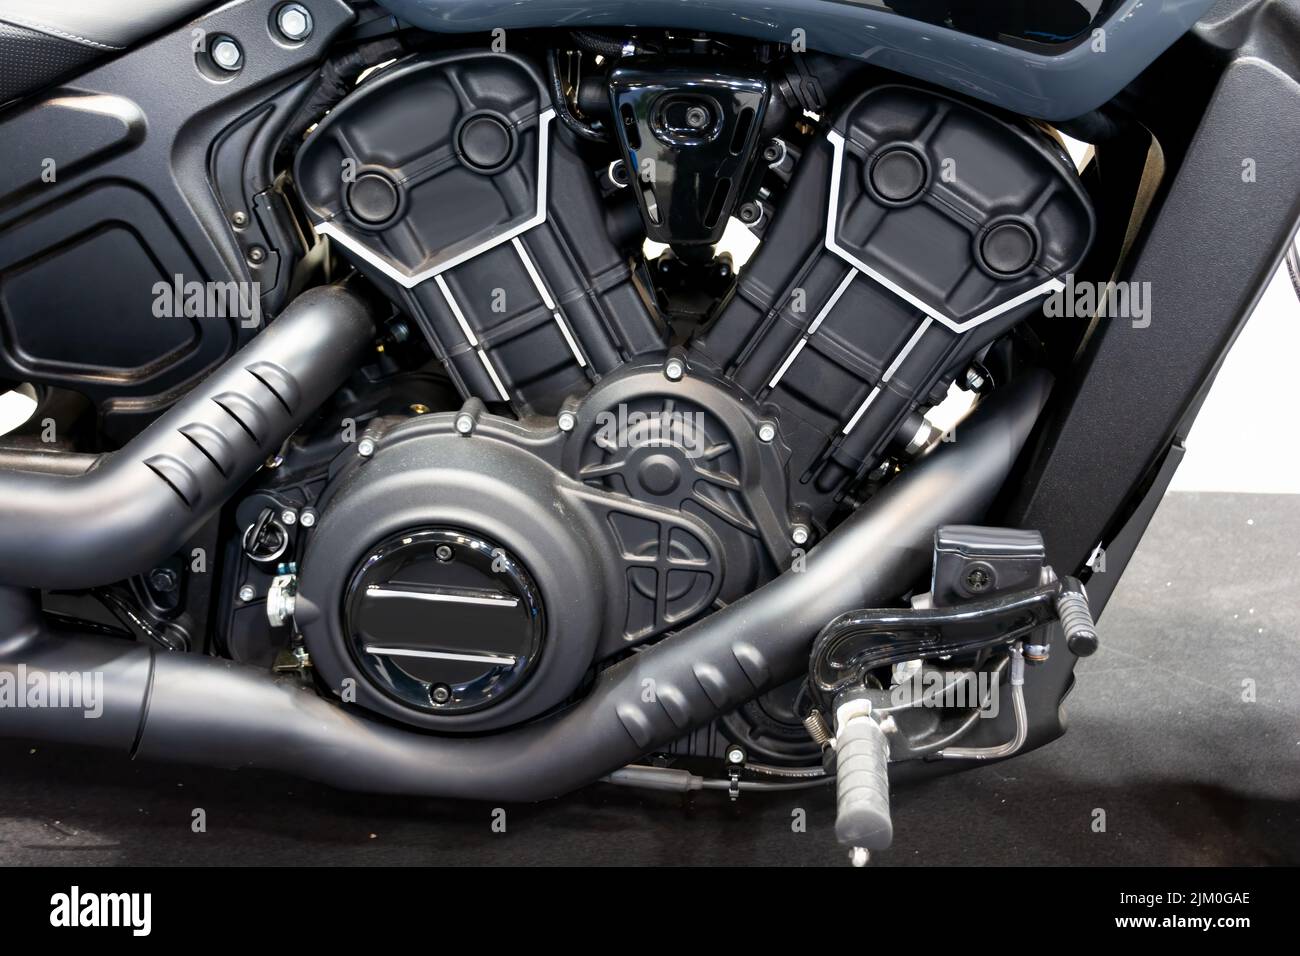 closeup awesome black engine of custom motorcycle Stock Photo